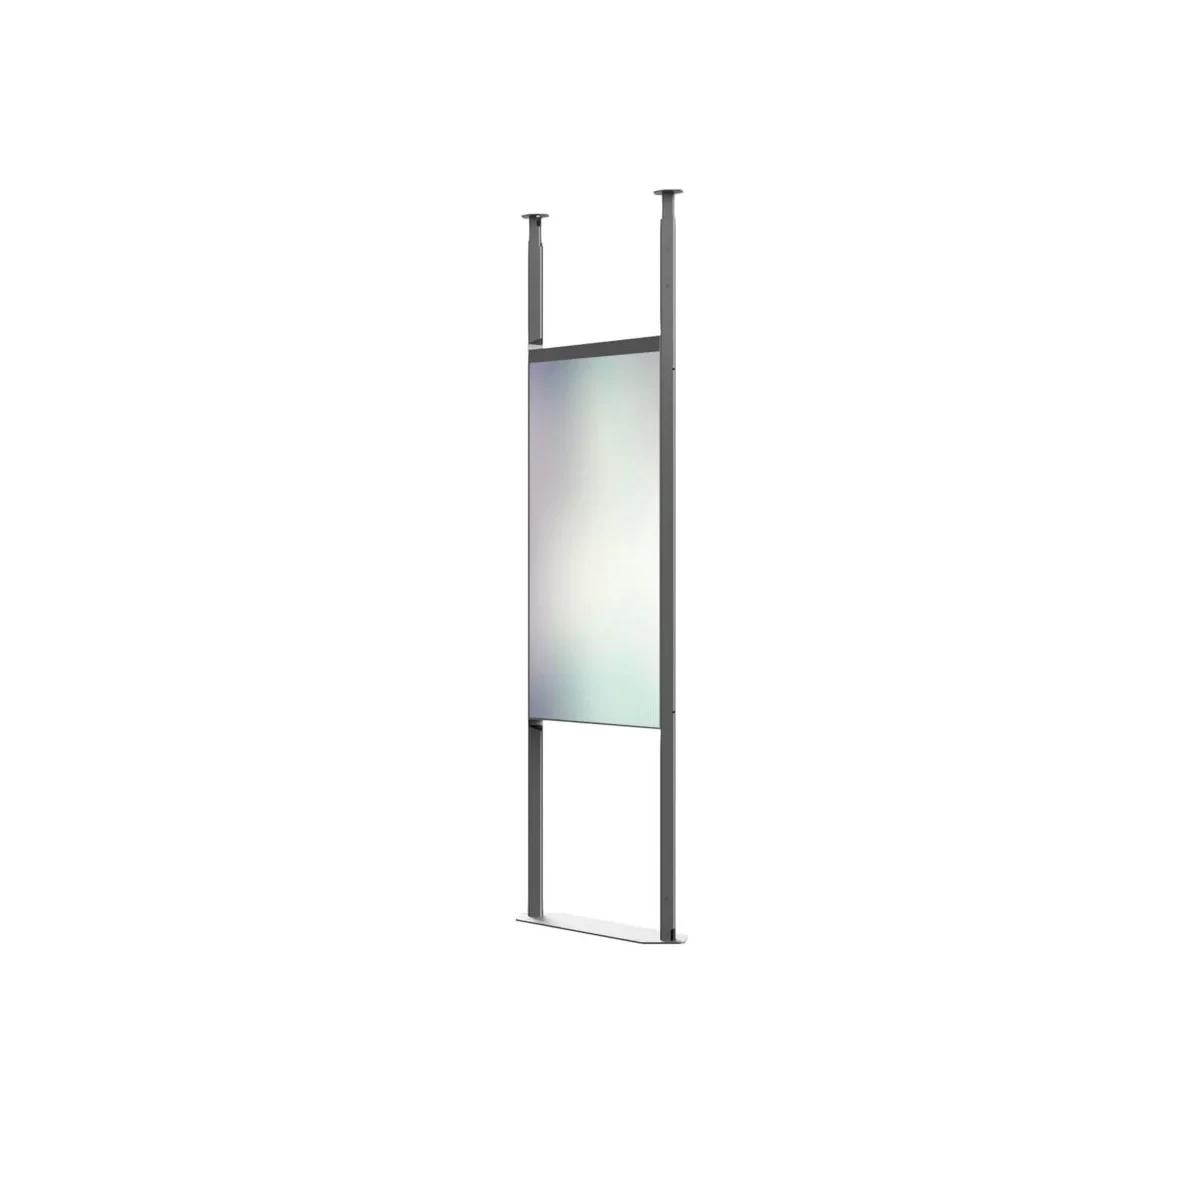 Edbak MWDFC.LG55XS4F Window Display Floor-to-Ceiling Mount for LG 55XS4F